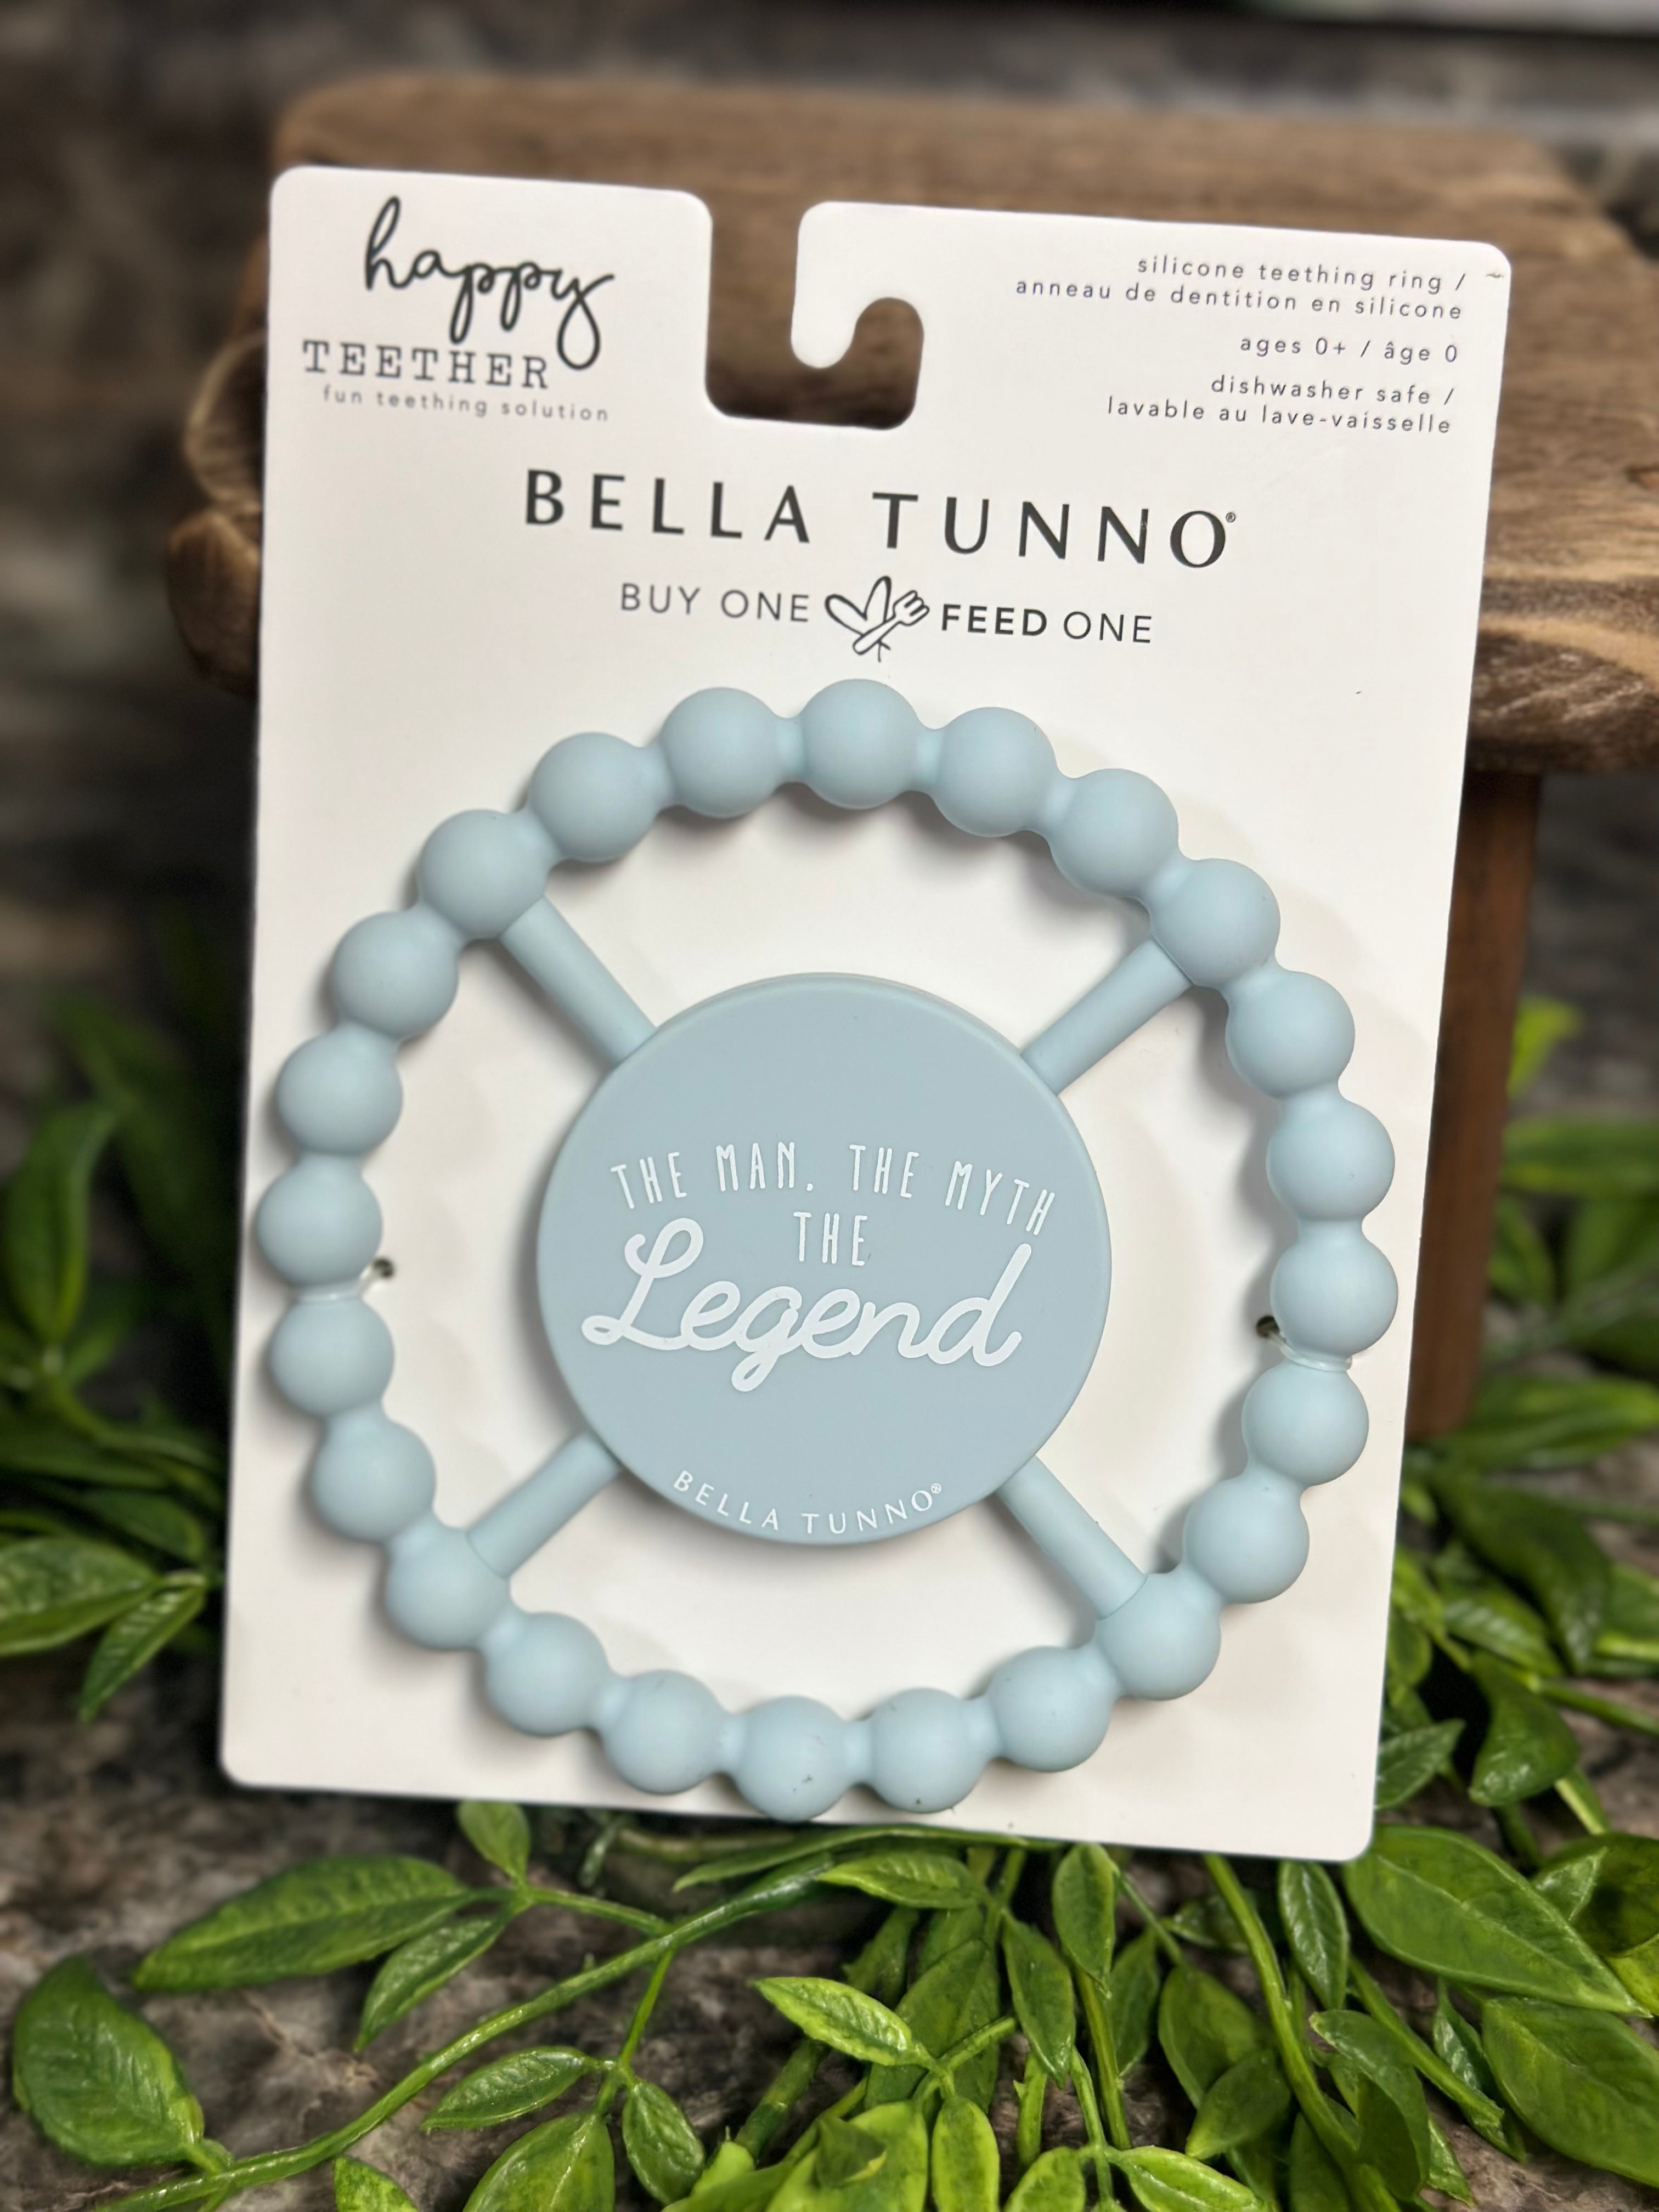 Bella Tunno “The Legend” Happy Teether